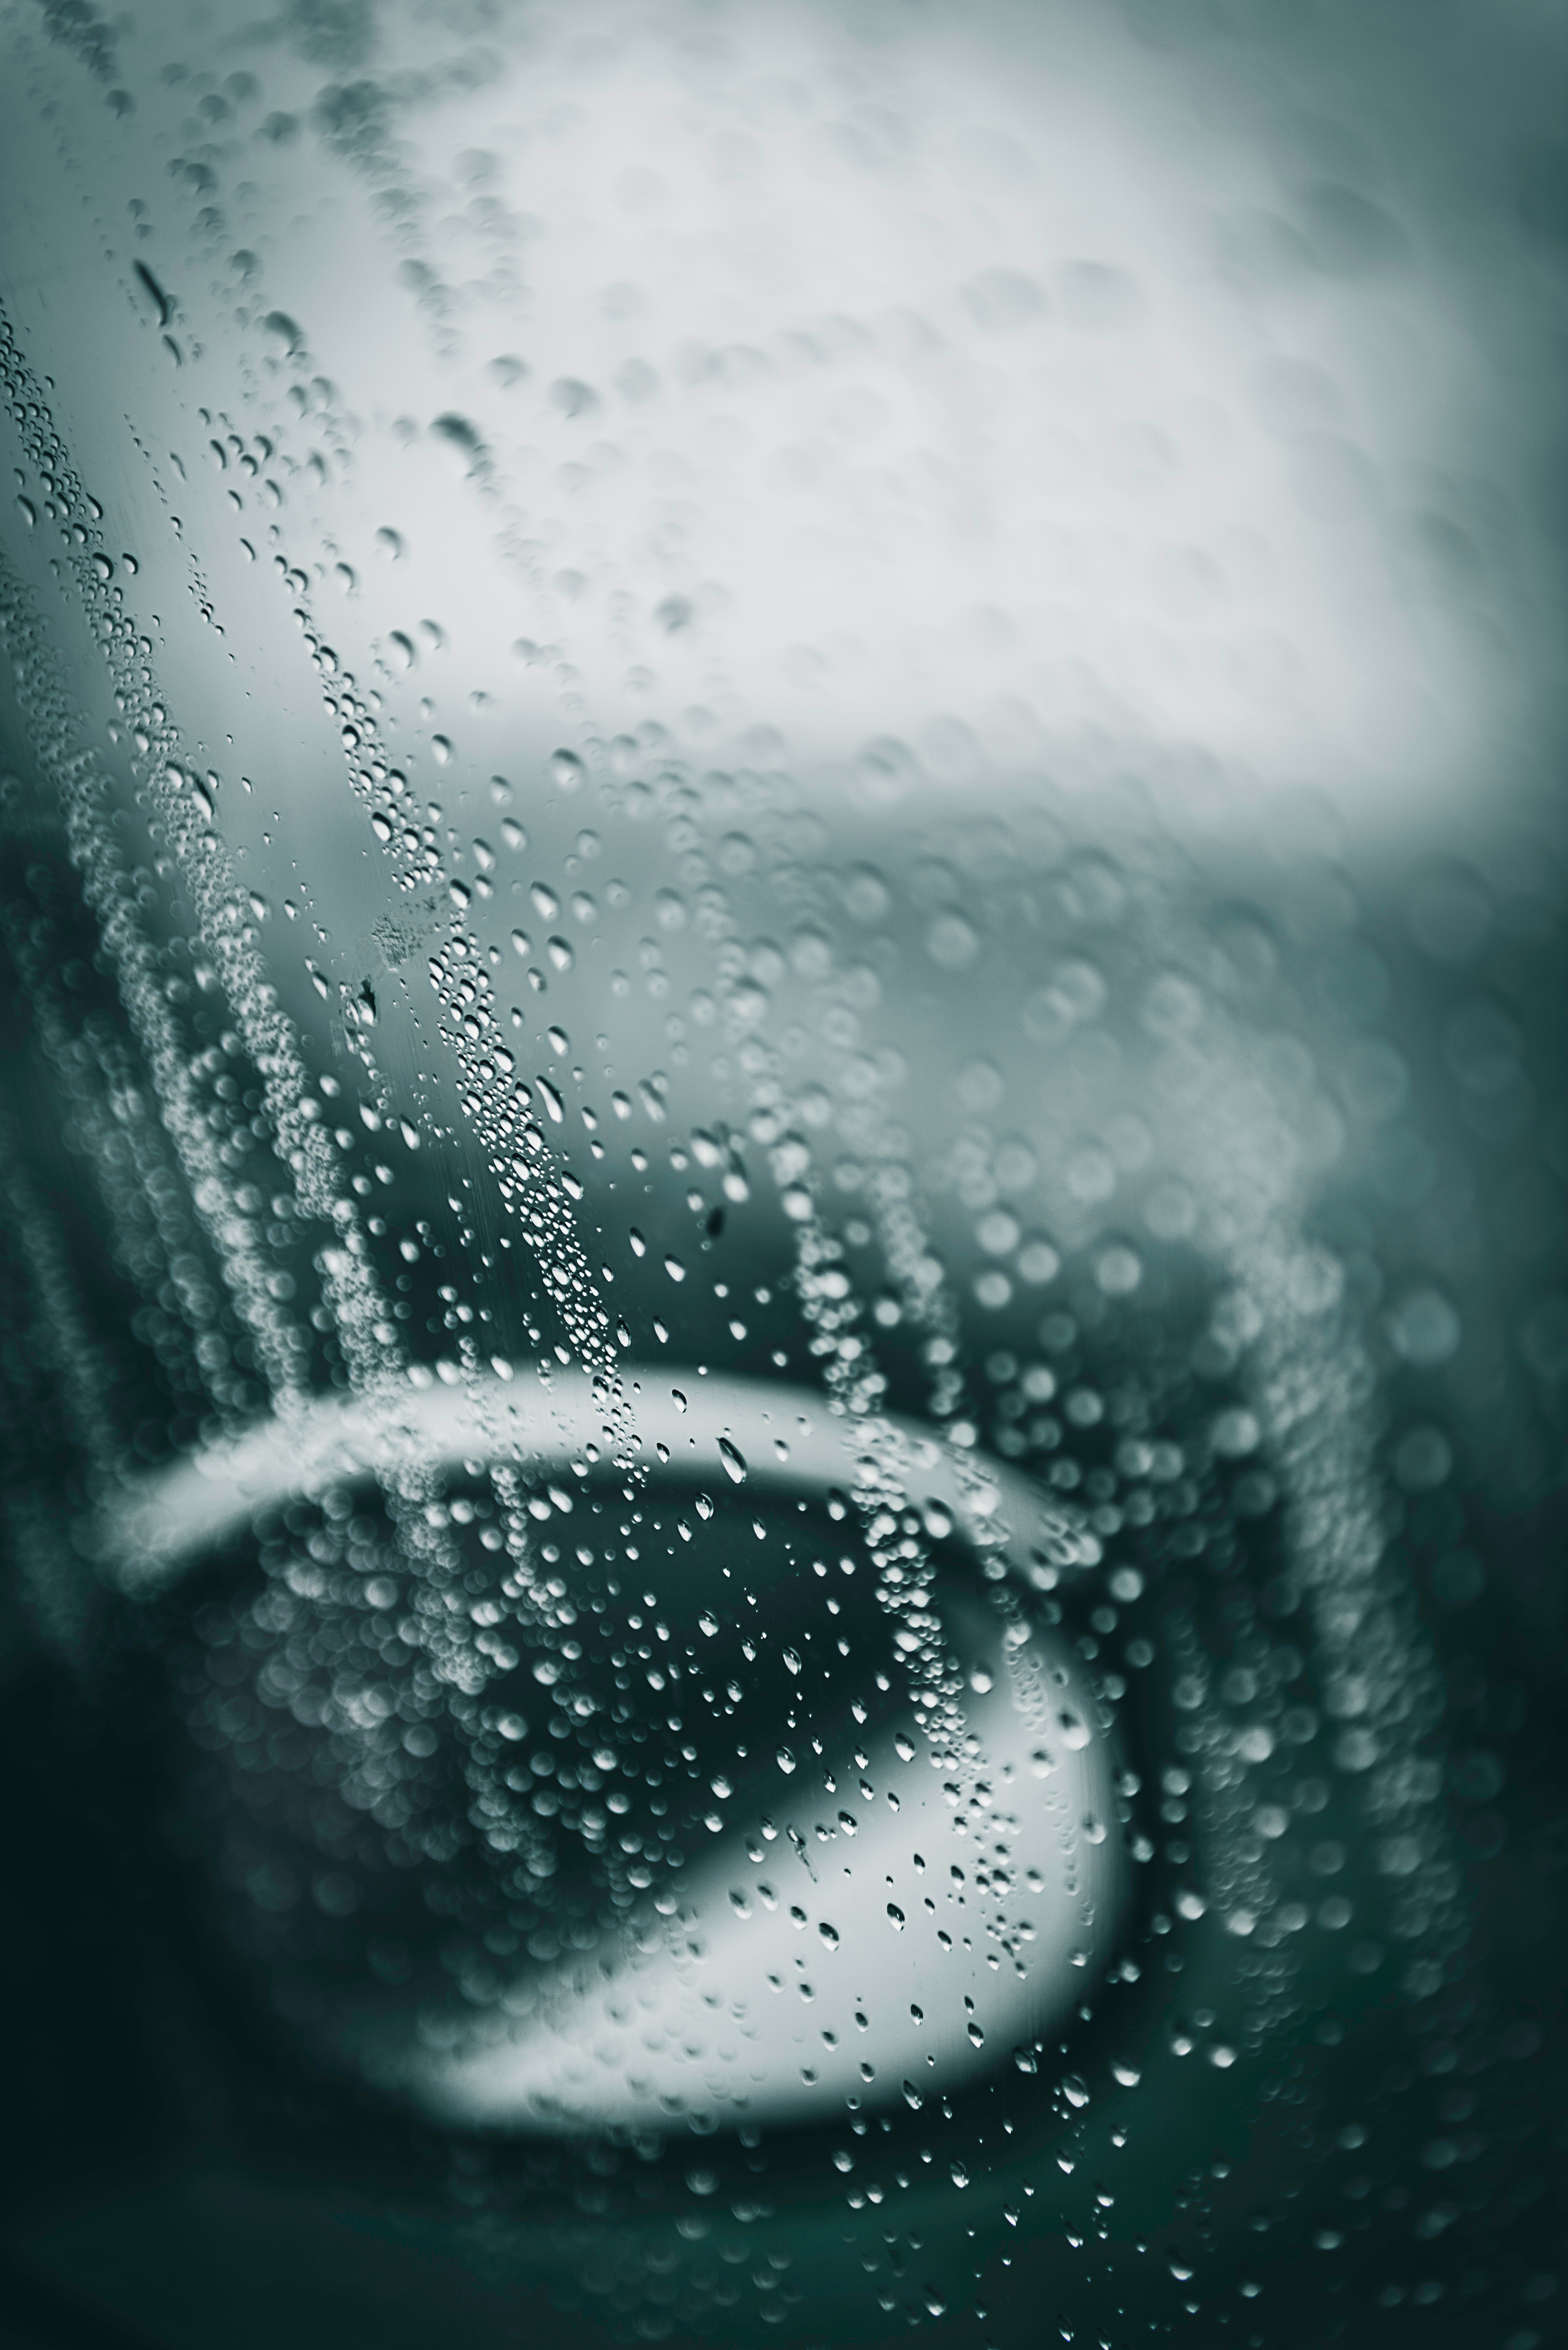 moisture, rain, drops, macro, surface, glass, window, mirror